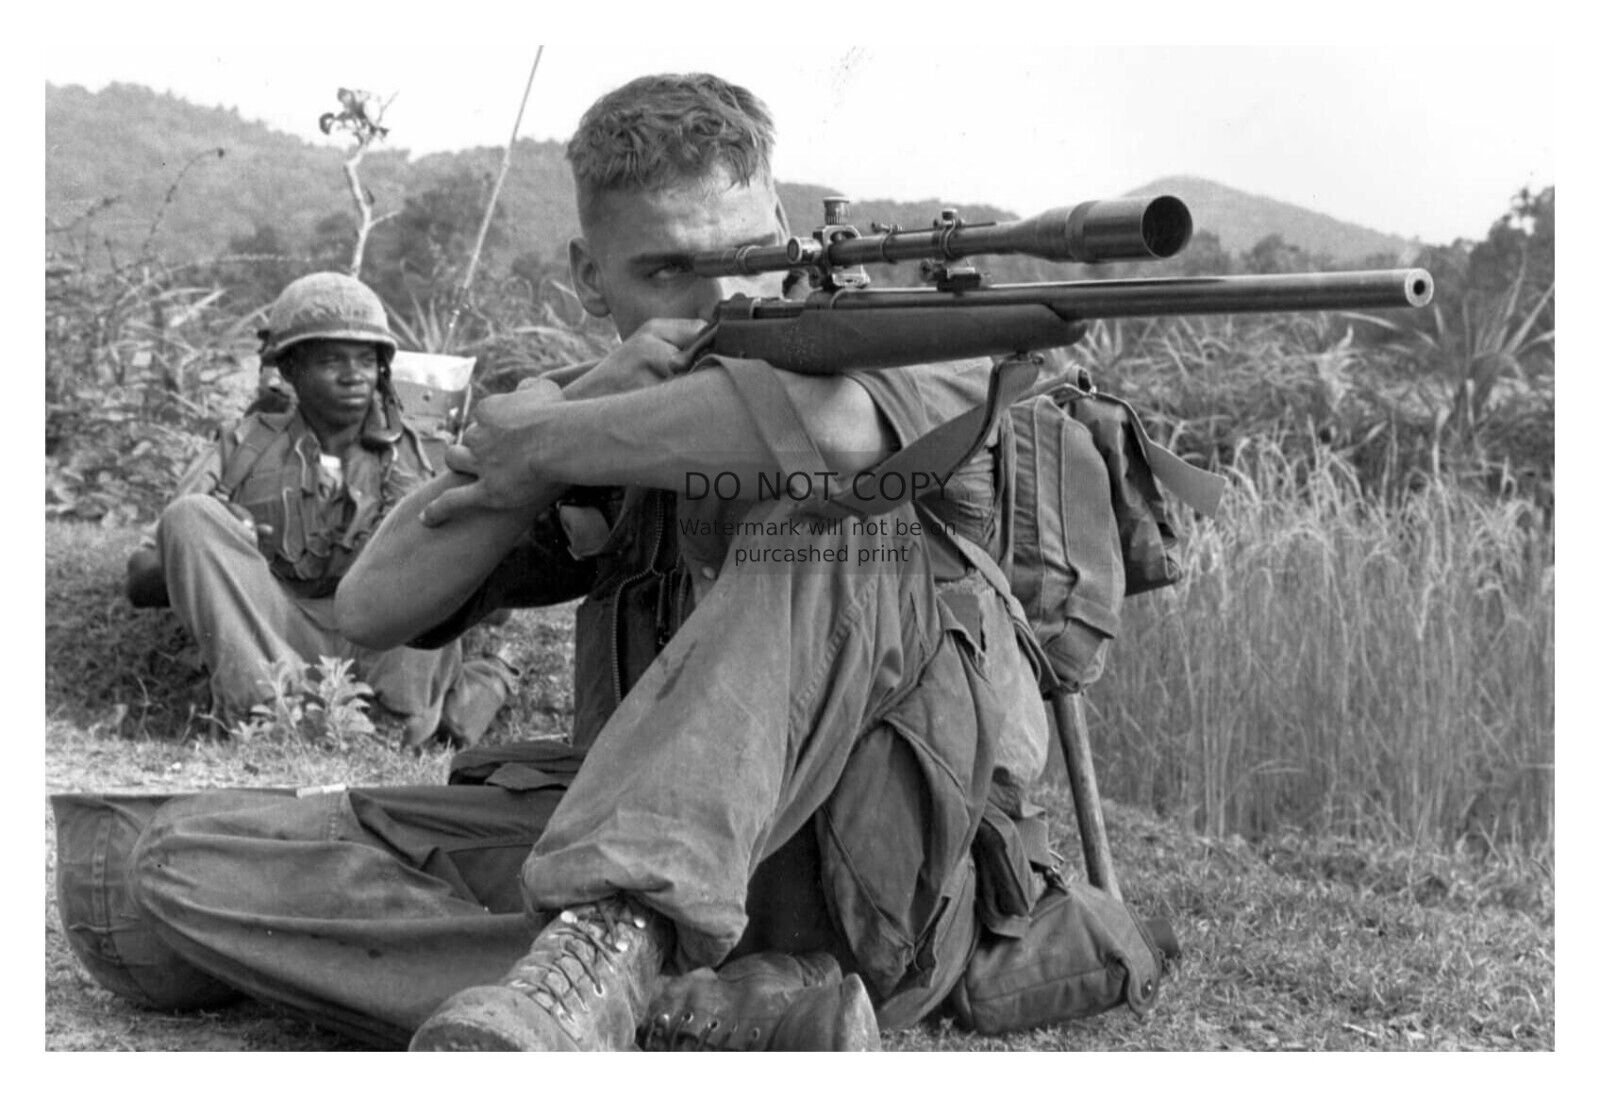 LANCE CORPORAL DALTON GUNDERSON VIETNAM WAR USMC SCOUT SNIPER 4X6 B&W PHOTO